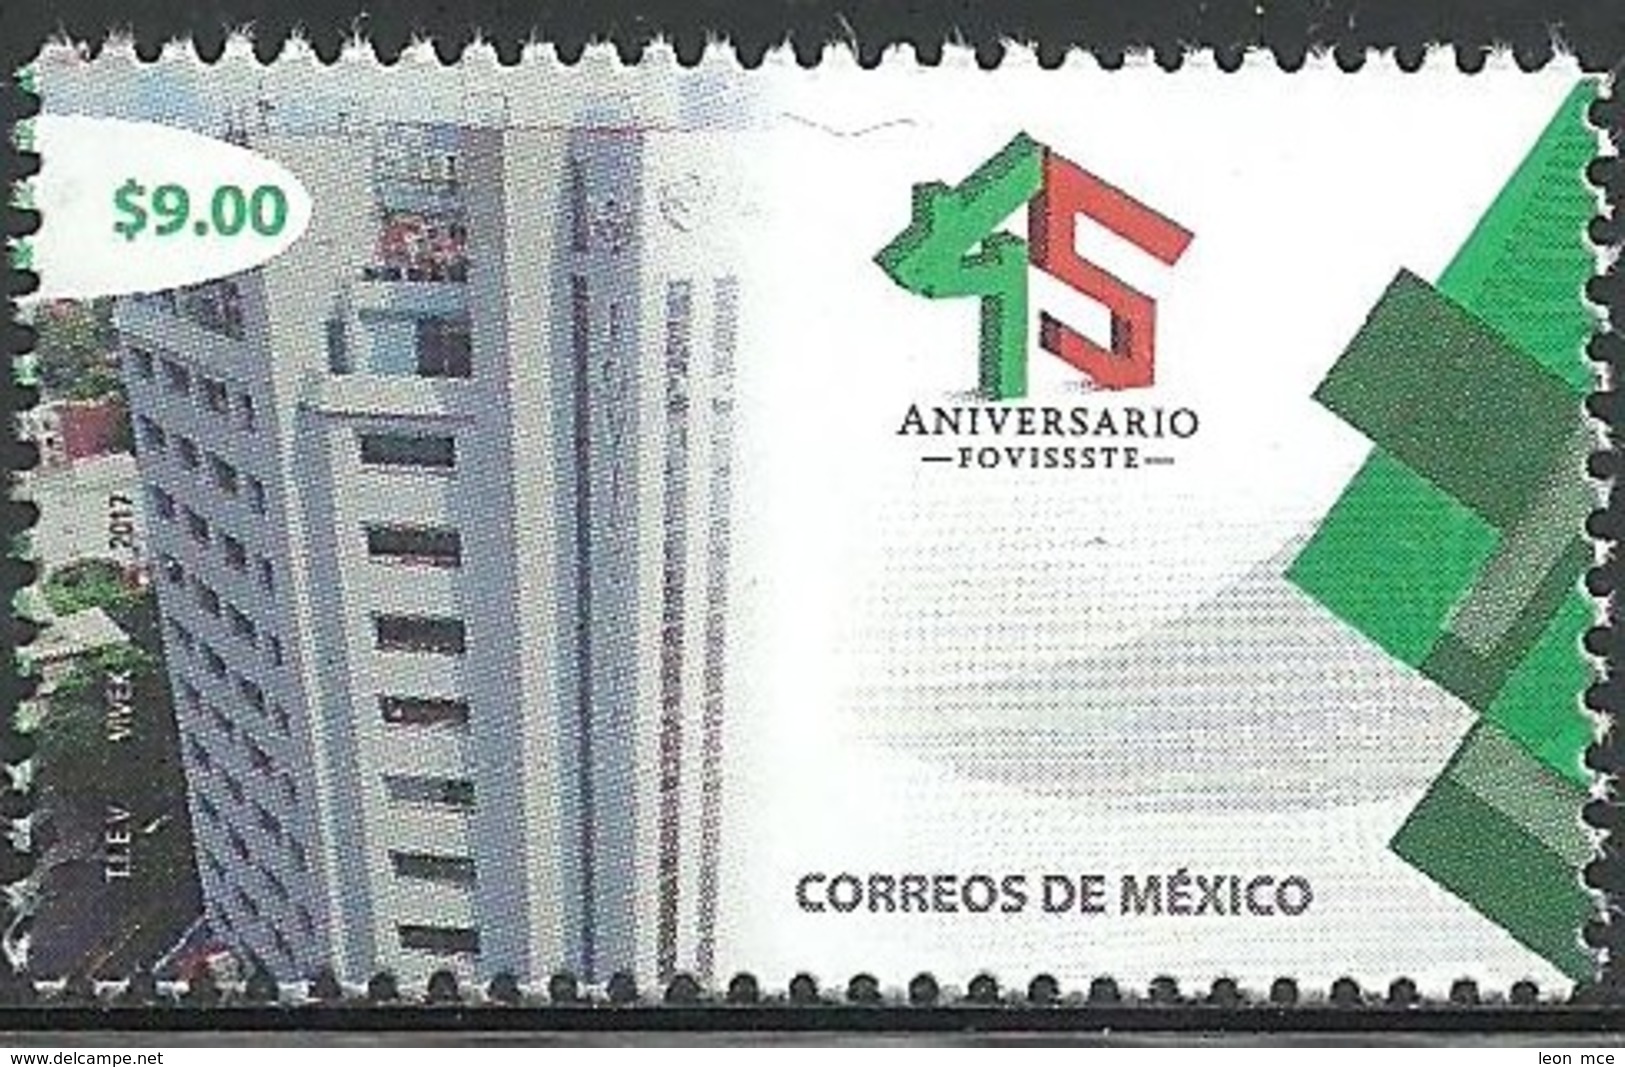 2017 MÉXICO 45 Aniversario Del FOVISSSTE VIVIENDA, ARQUITECTURA MNH LIVING PLACE, ARCHITECTURE, Apartment Building - Mexico